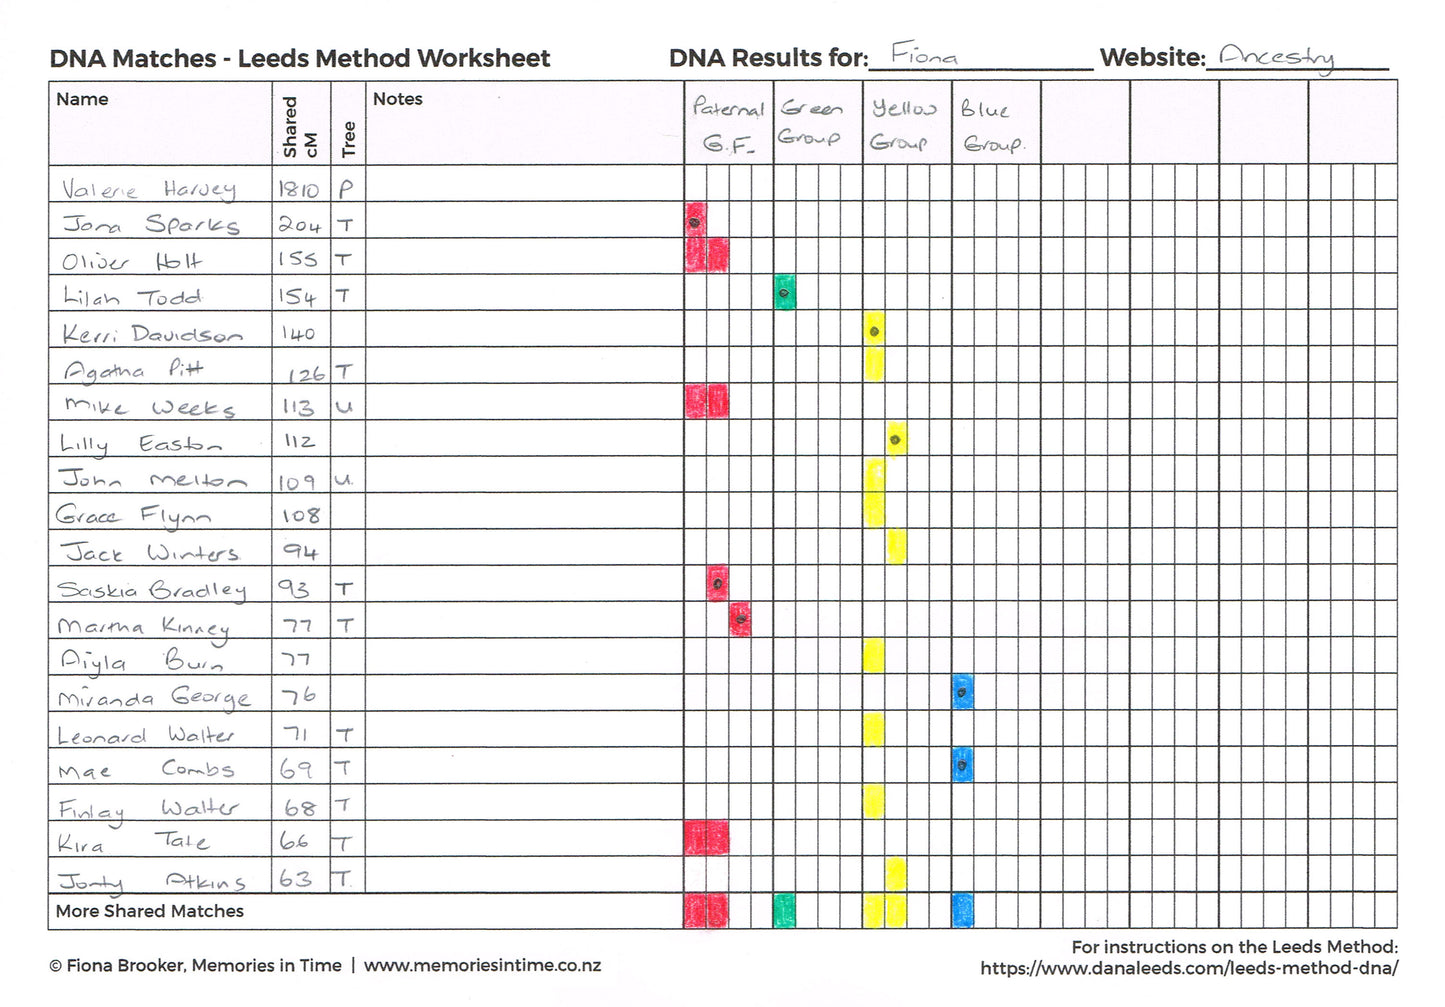 DNA Match - Leeds Method Worksheet